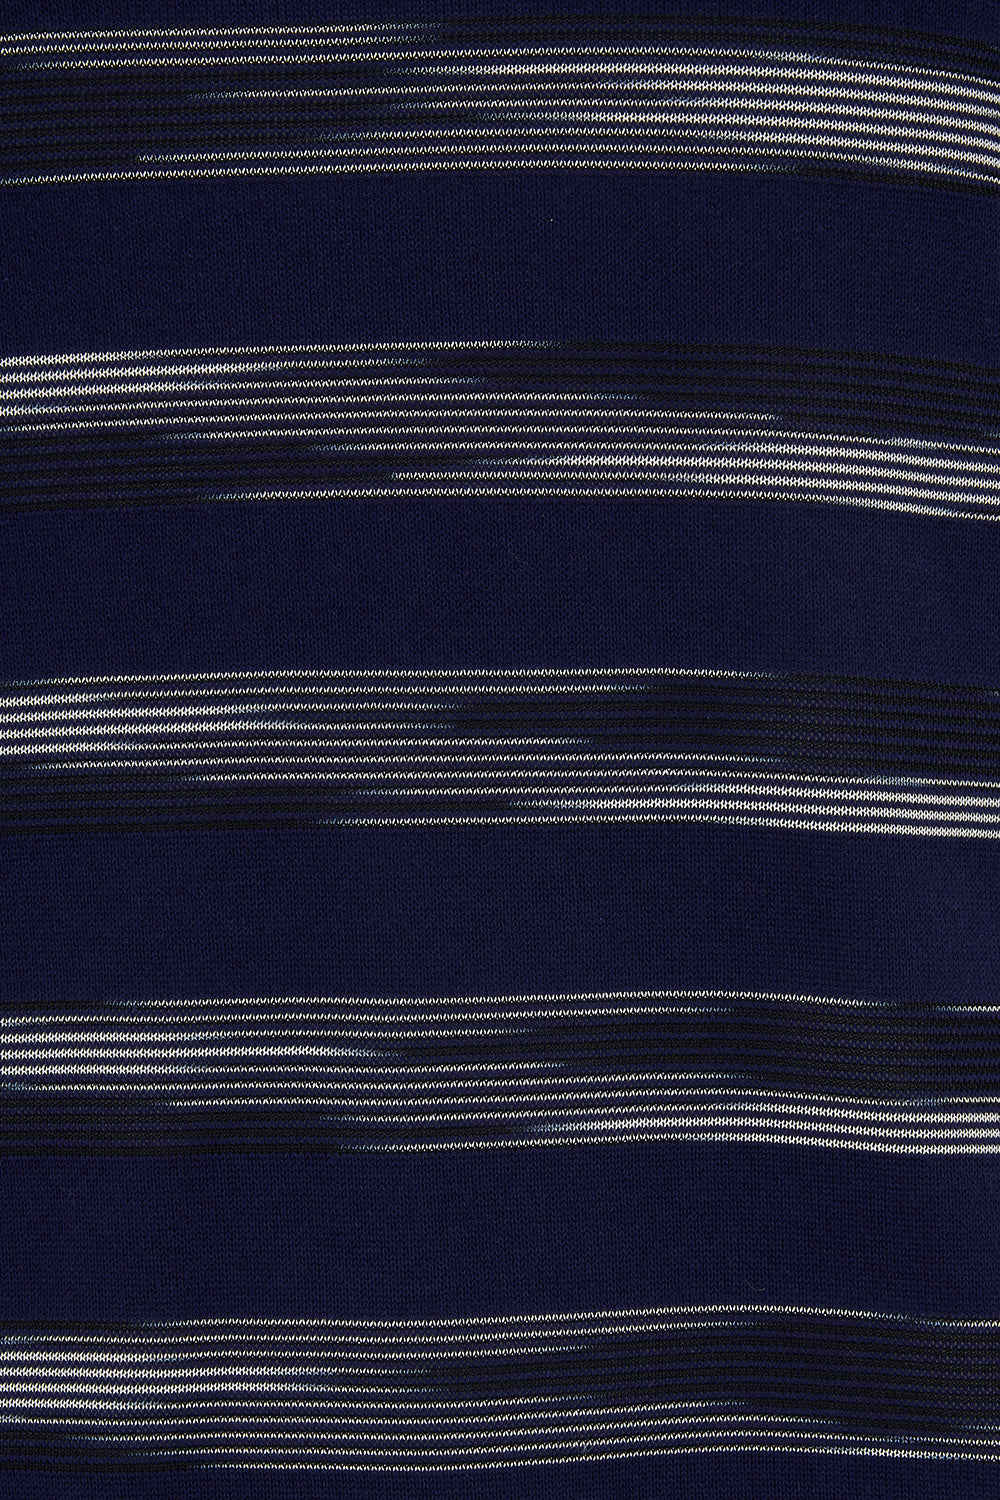 Missoni Men’s Striped Crew-Neck T-shirt Navy - Close Up Pattern